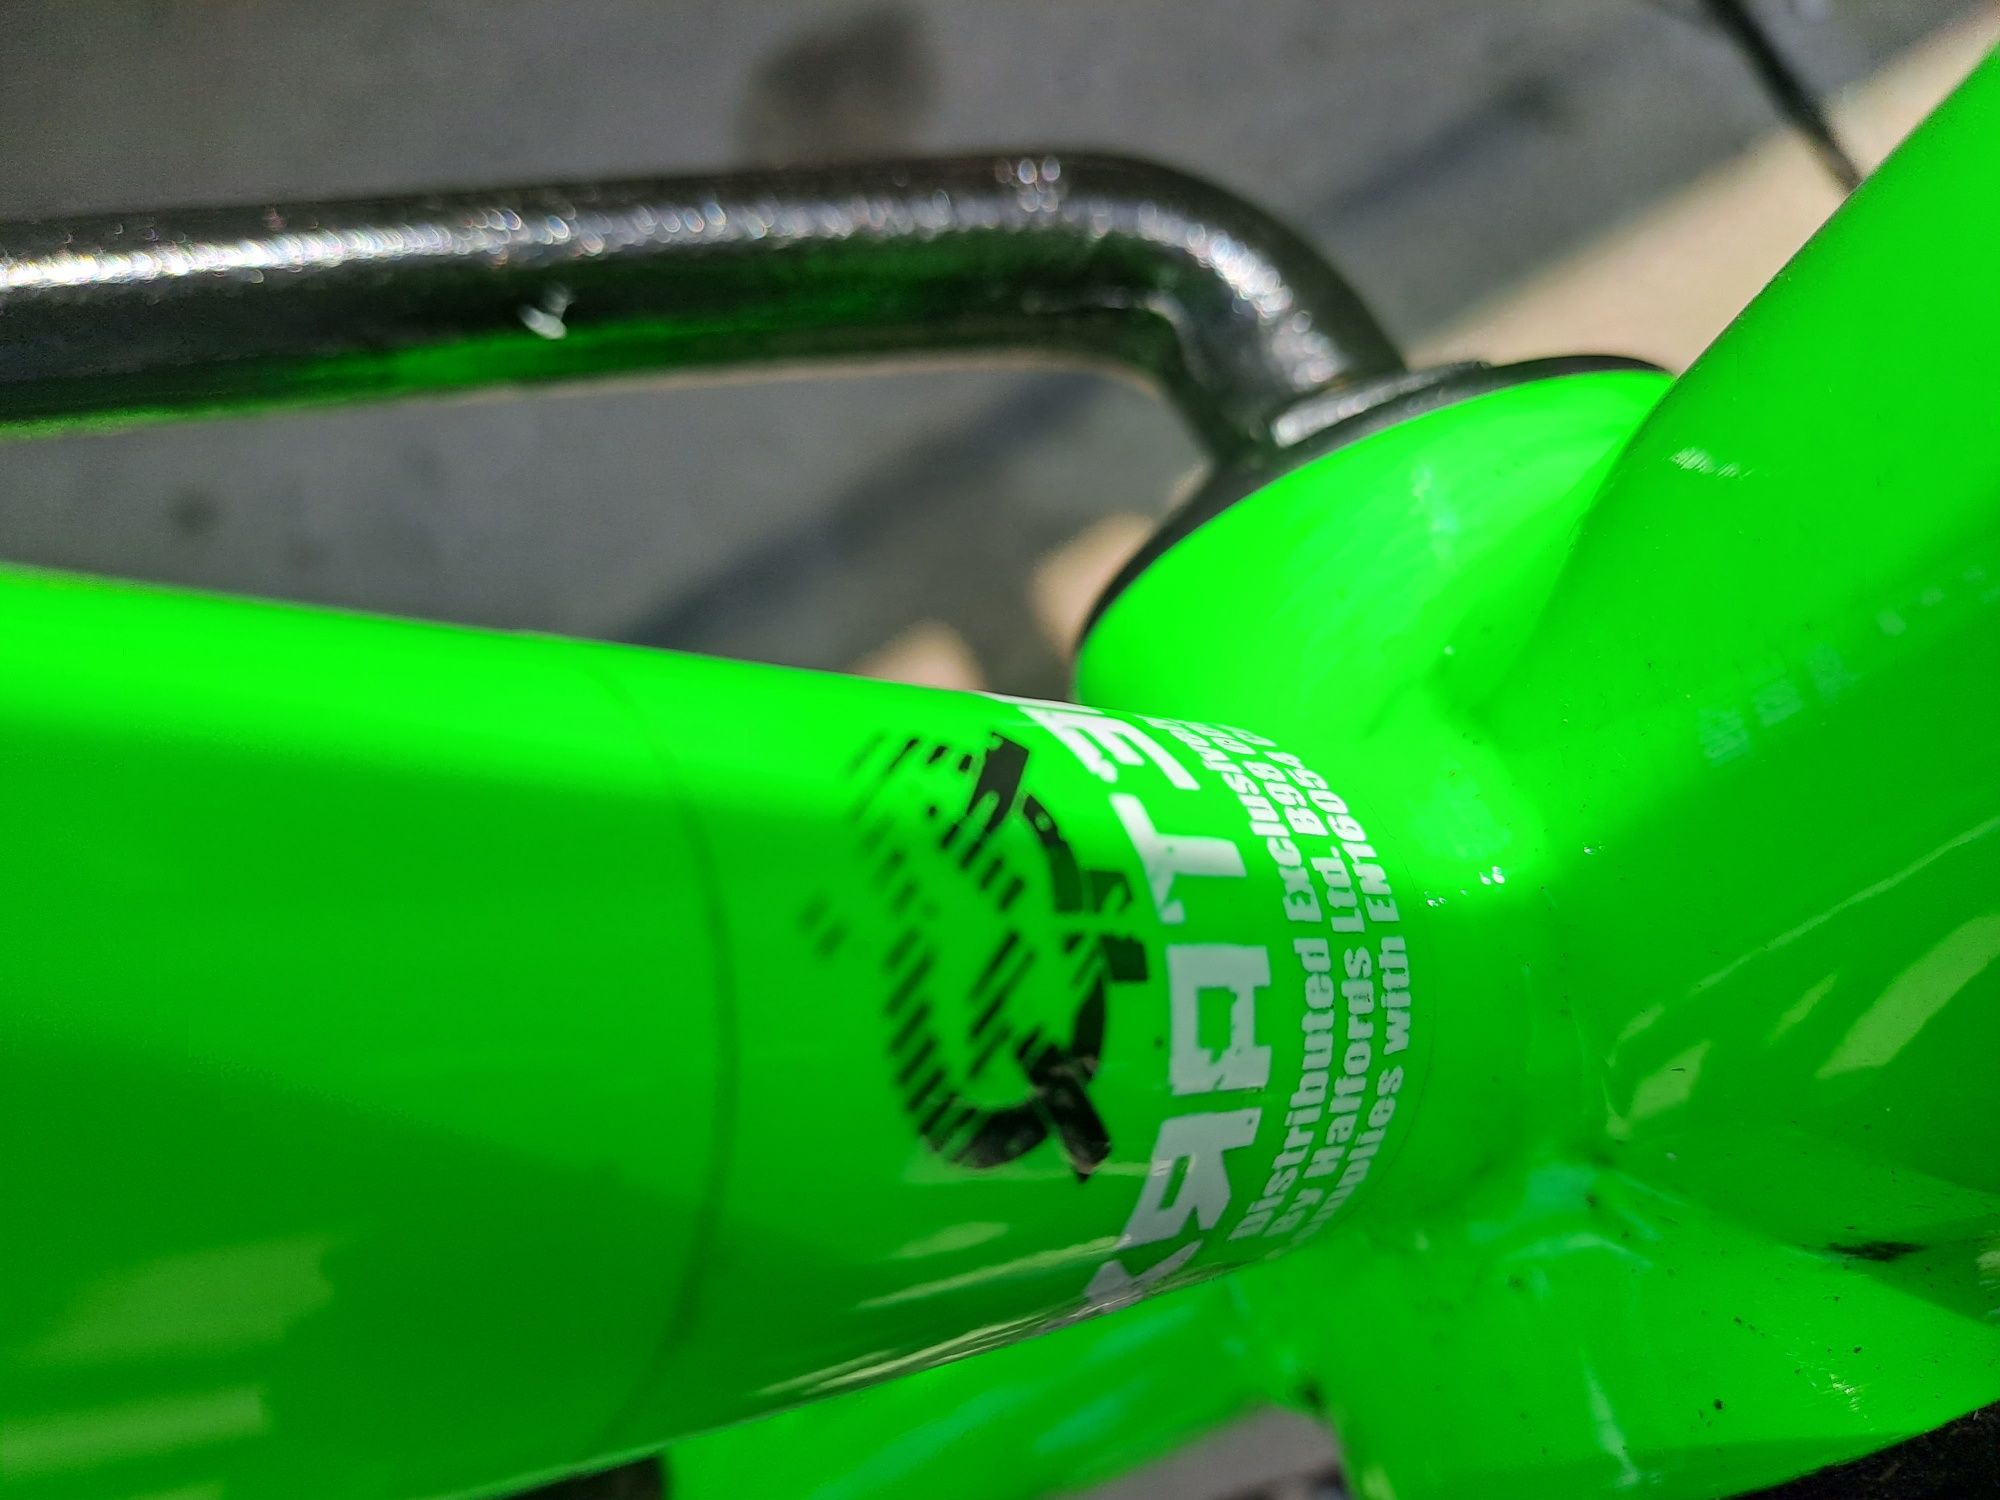 Bicicleta BMx fat X Rated Neon 24